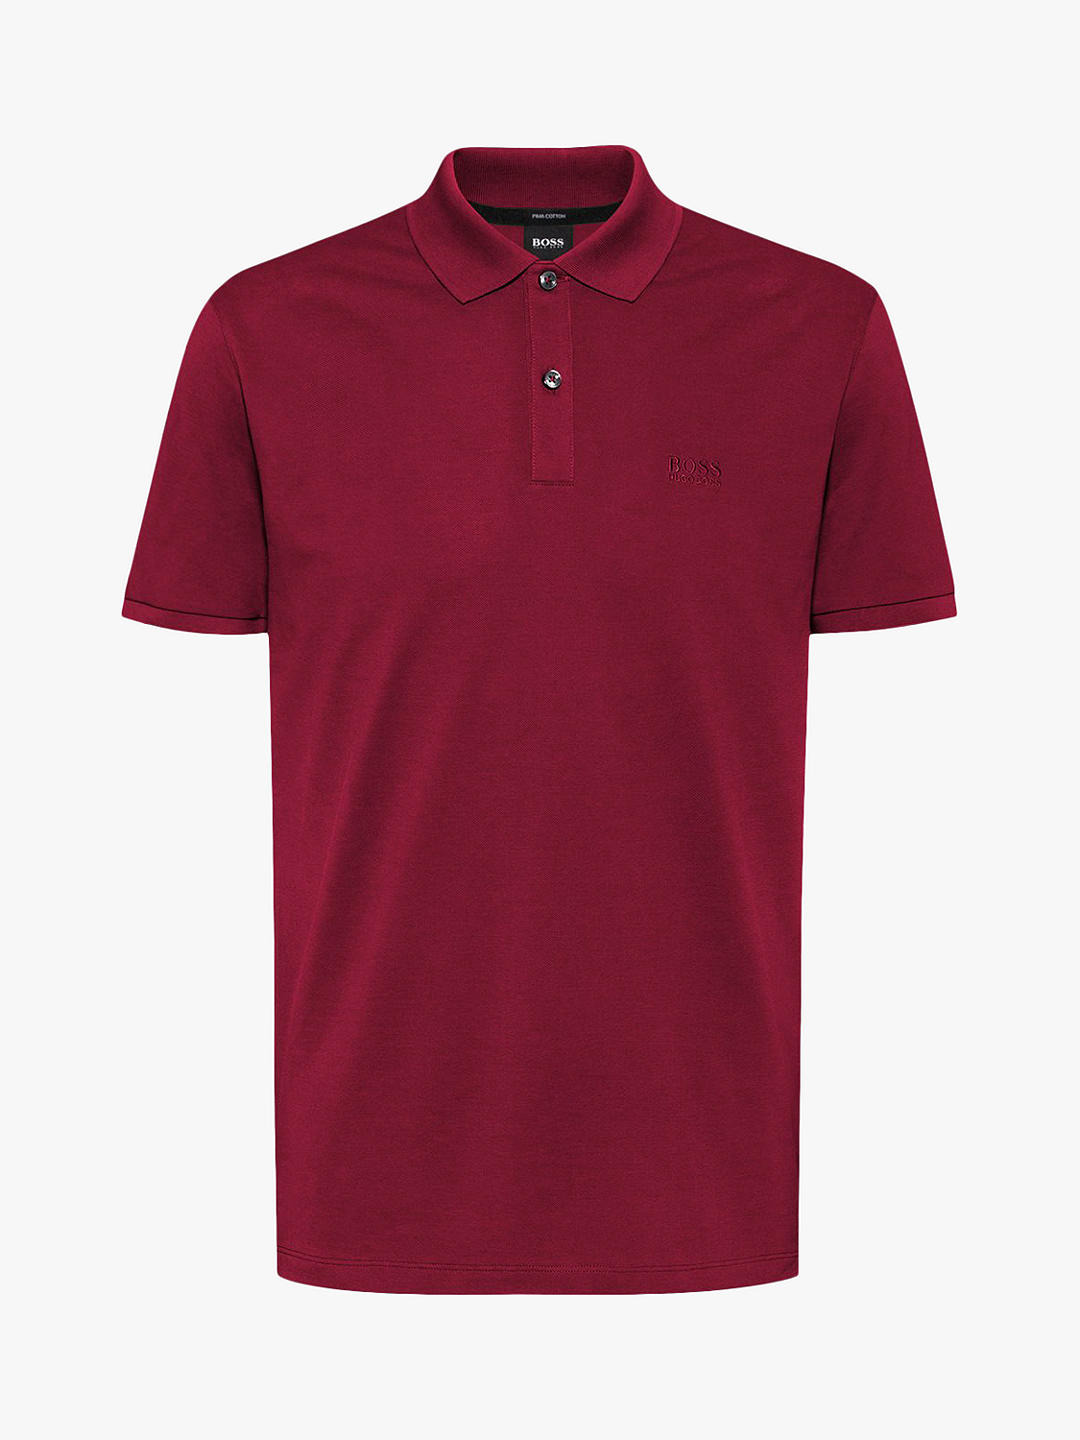 BOSS Pallas Regular Fit Polo Shirt, Dark Red at John Lewis & Partners